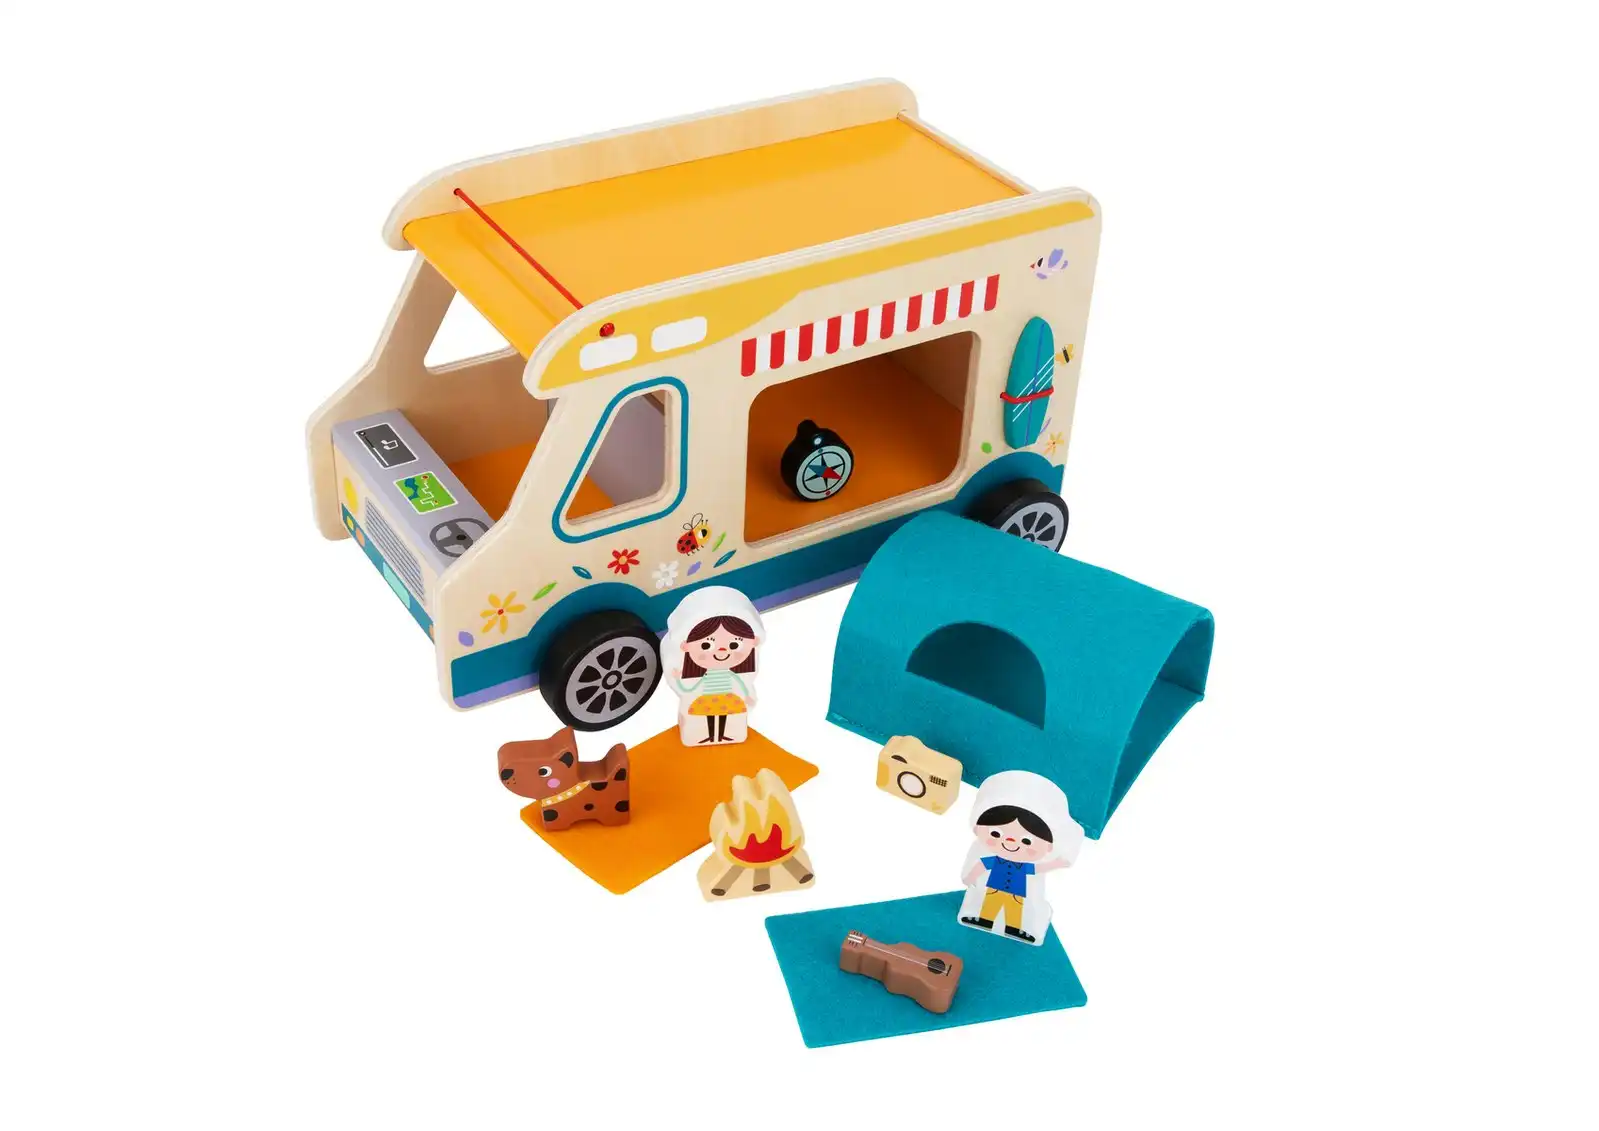 Tooky Toy Kids/Toddler Pretend Play Camping Rolling Rv Caravan Toy Playset 3+